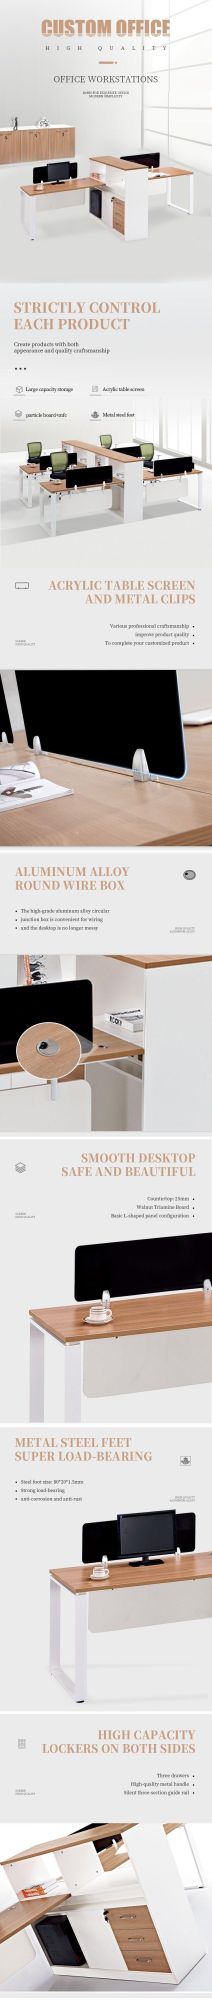 Panel System Modular Office Furniture Workstation Desk with Partition